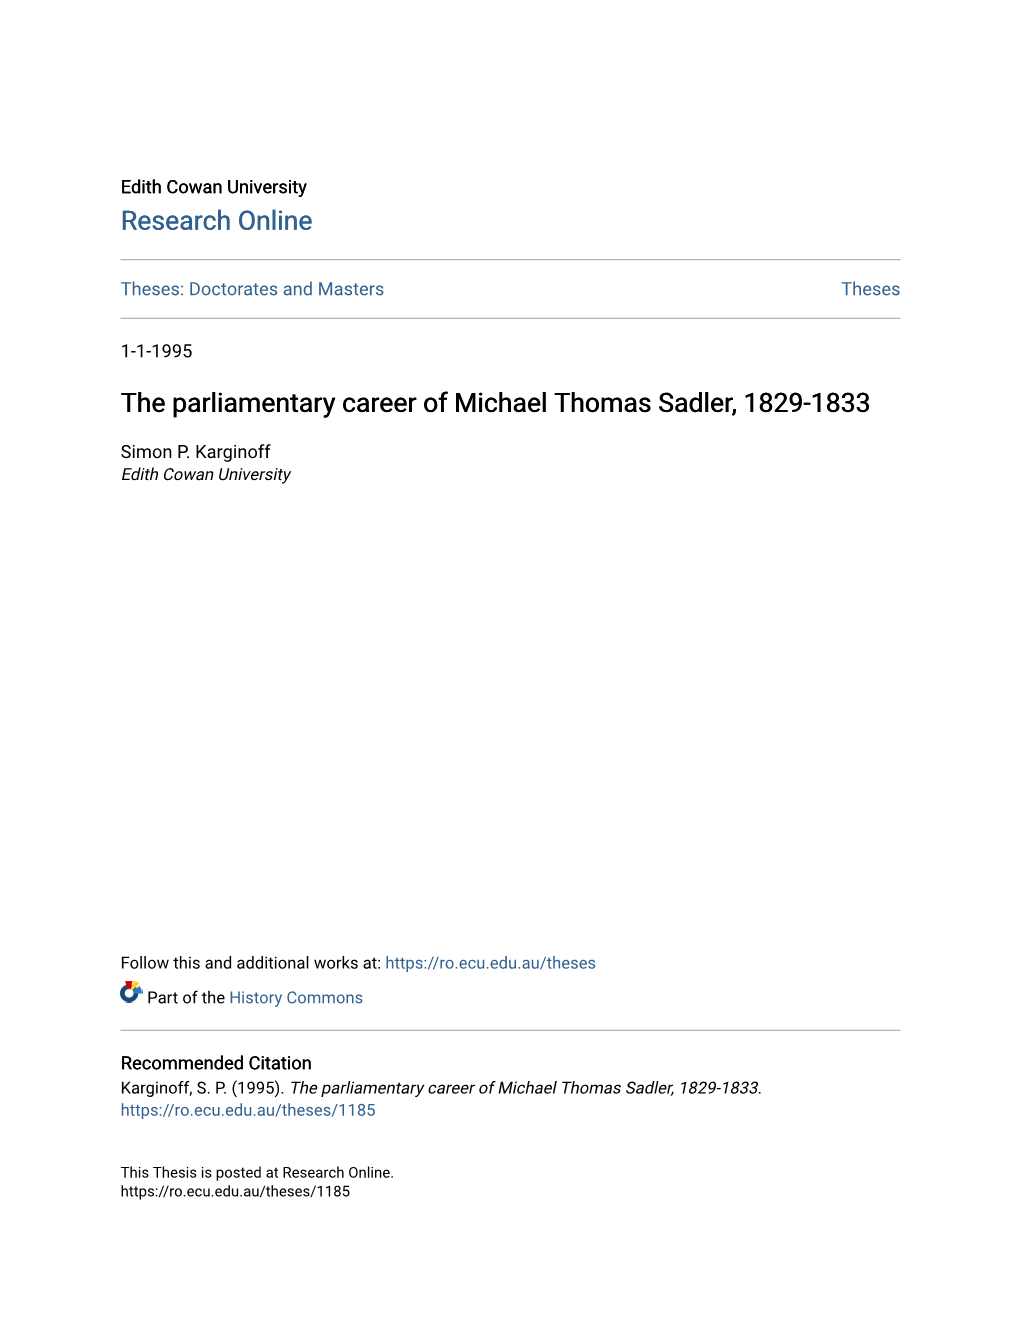 The Parliamentary Career of Michael Thomas Sadler, 1829-1833